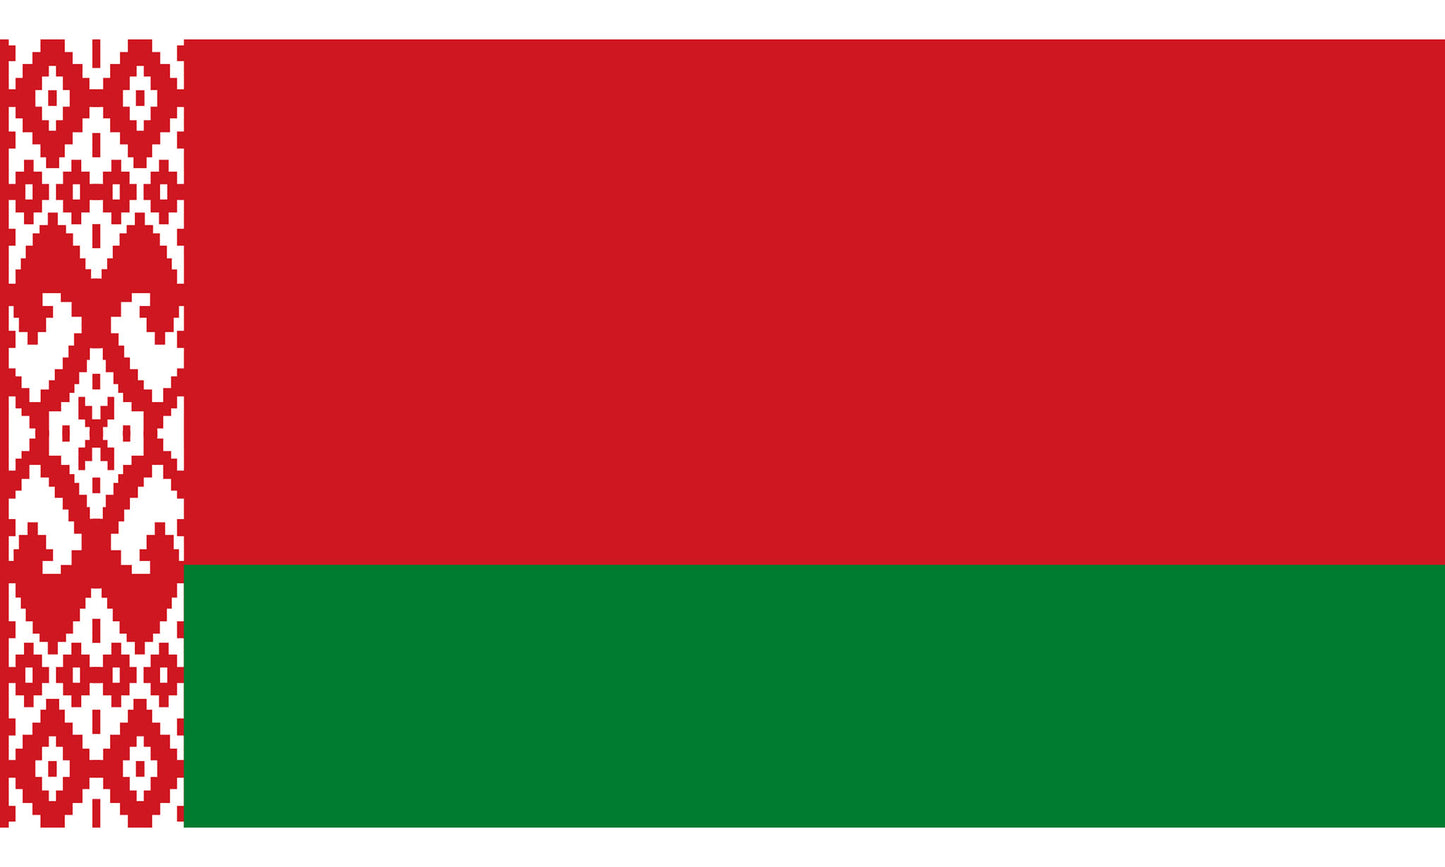 UF-BLR-150x90 - государственный флаг Республики Беларусь